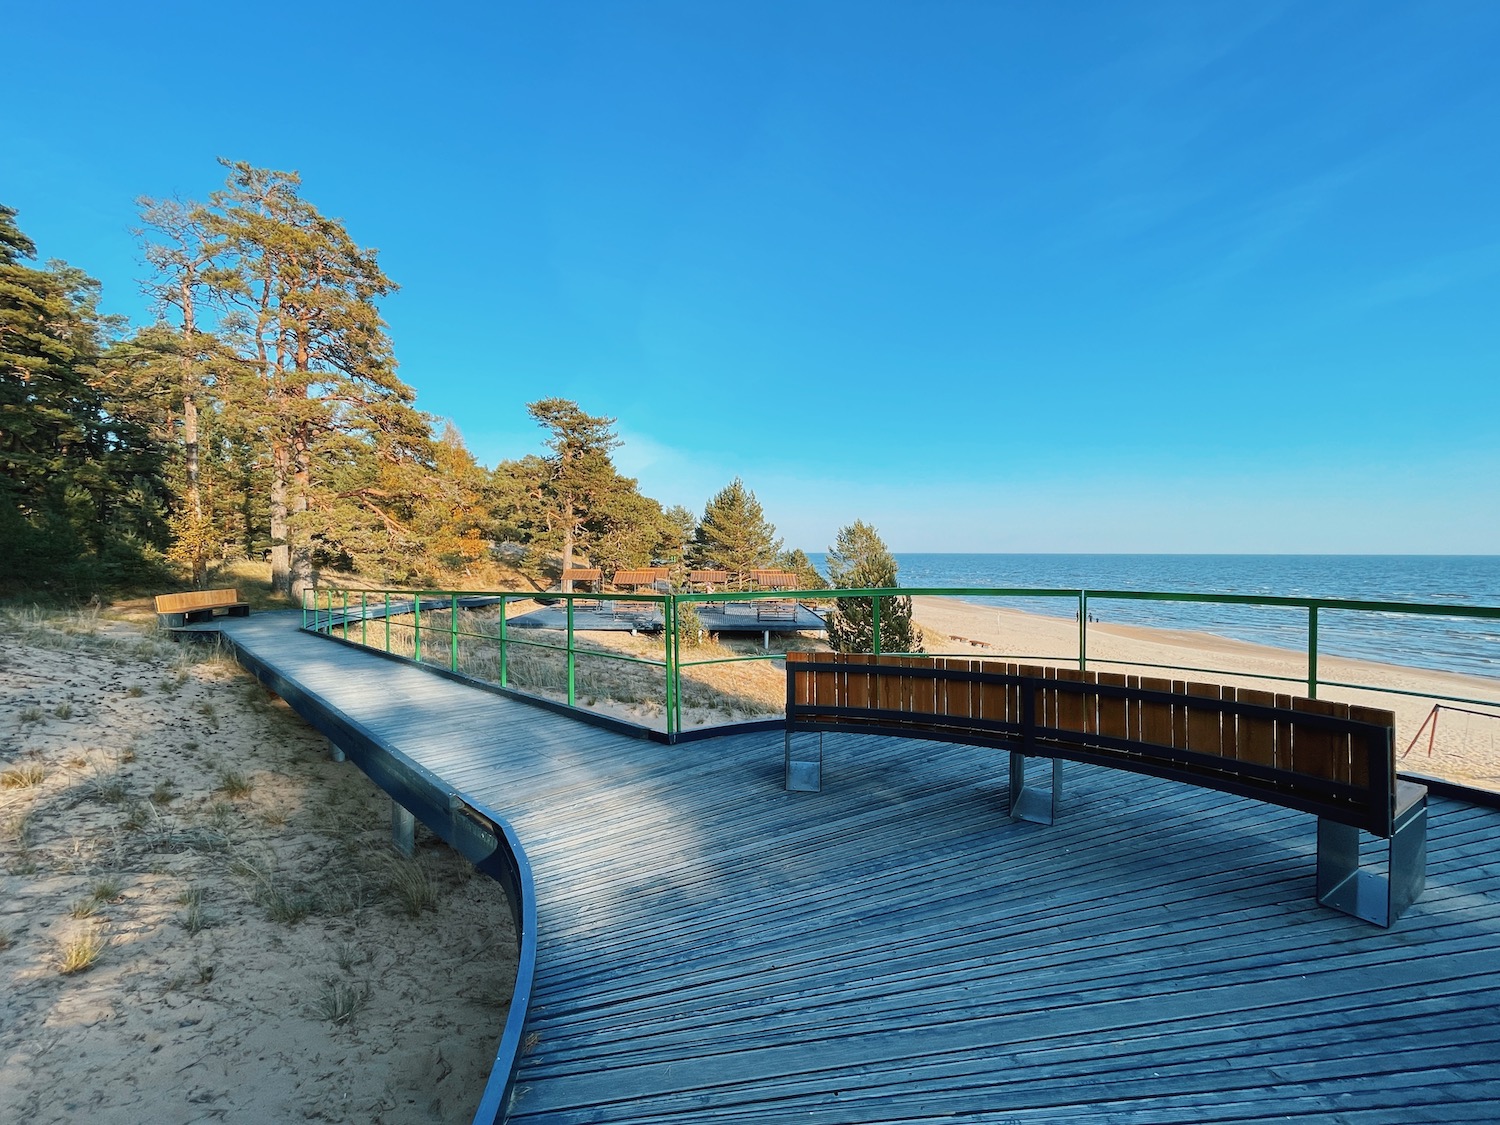 Estonian Peipsi vacation homes for families, best rental homes in Estonia